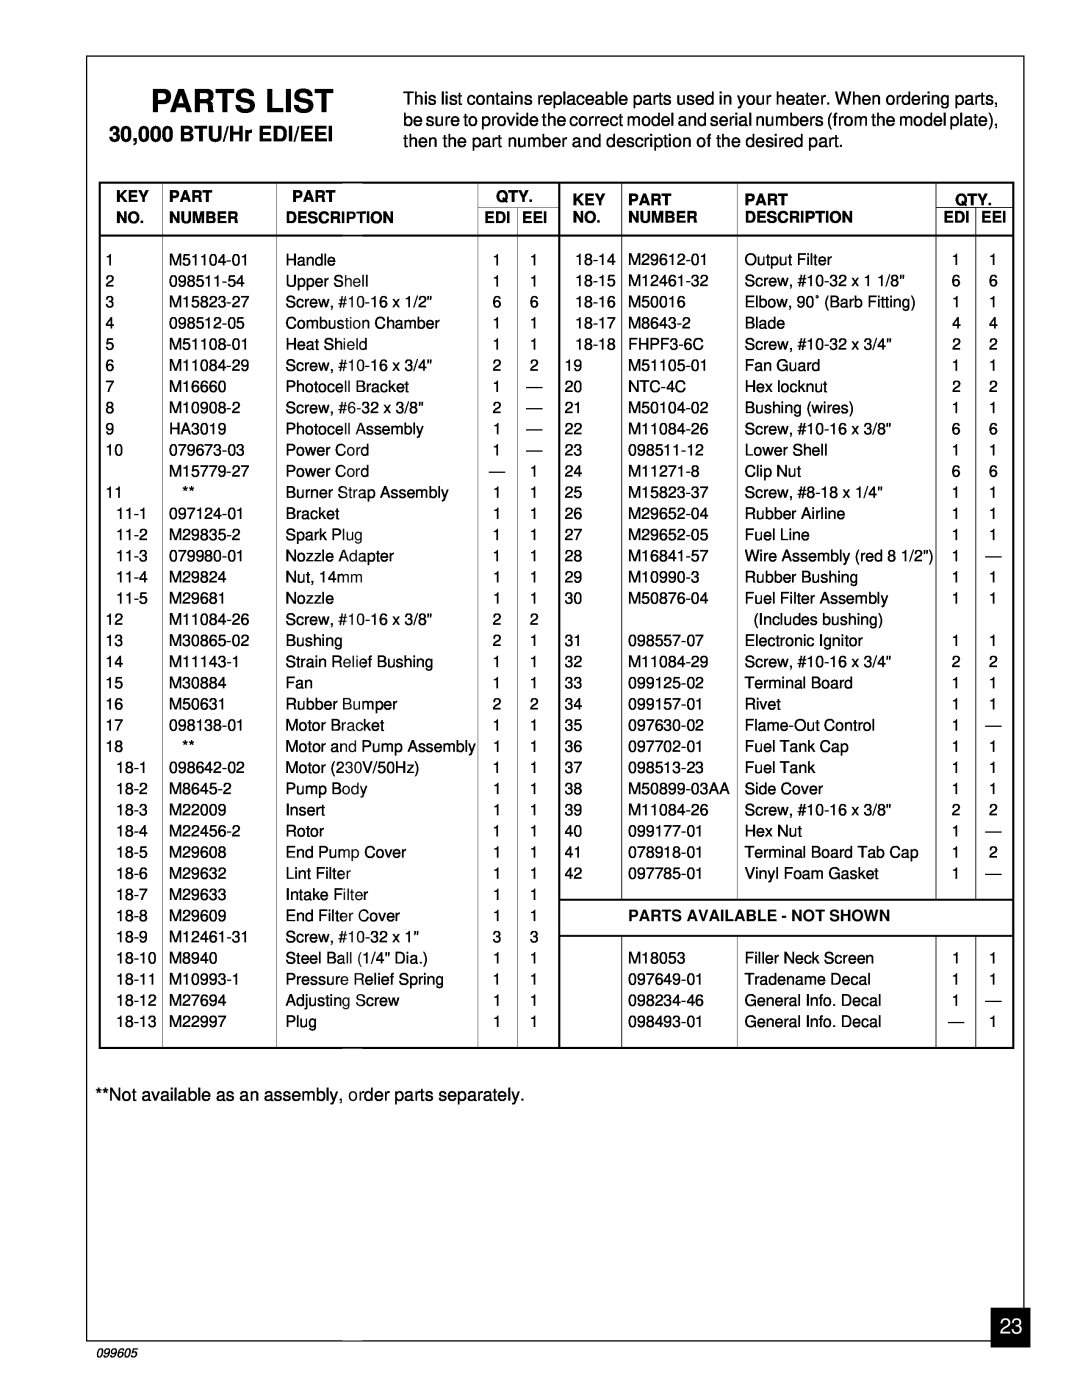 Desa H.S.I. Series owner manual Parts List, 30,000 BTU/Hr EDI/EEI 